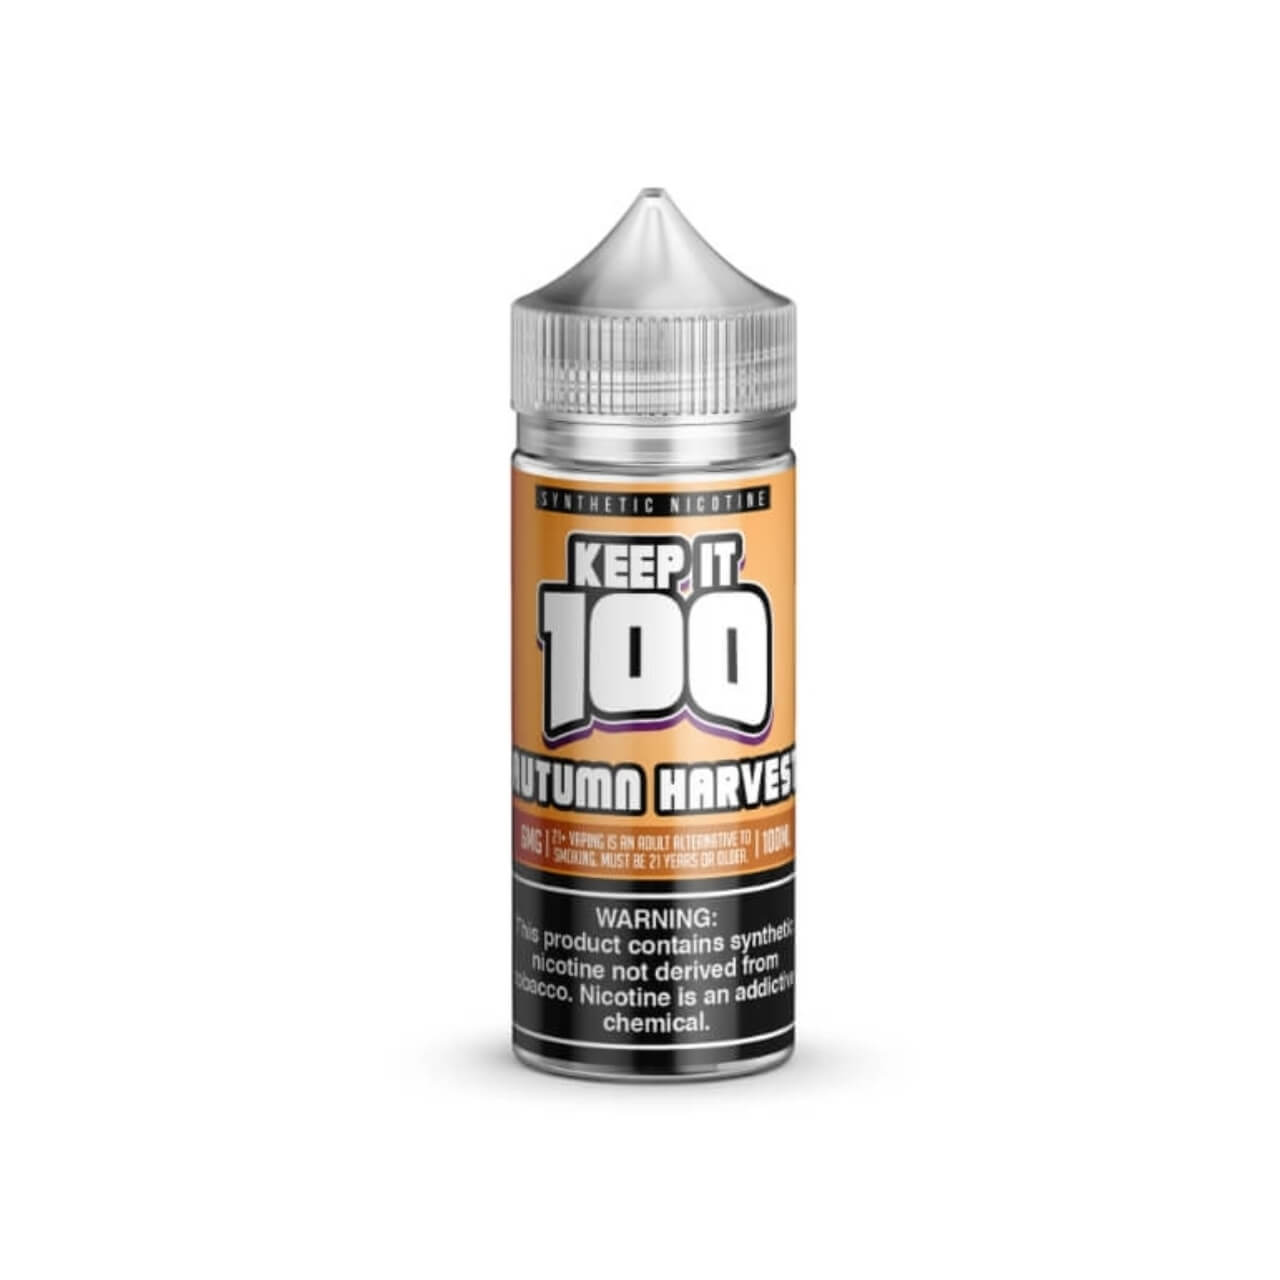 Keep it 100 Autumn Harvest Synthetic Nicotine 100ml E-Juice